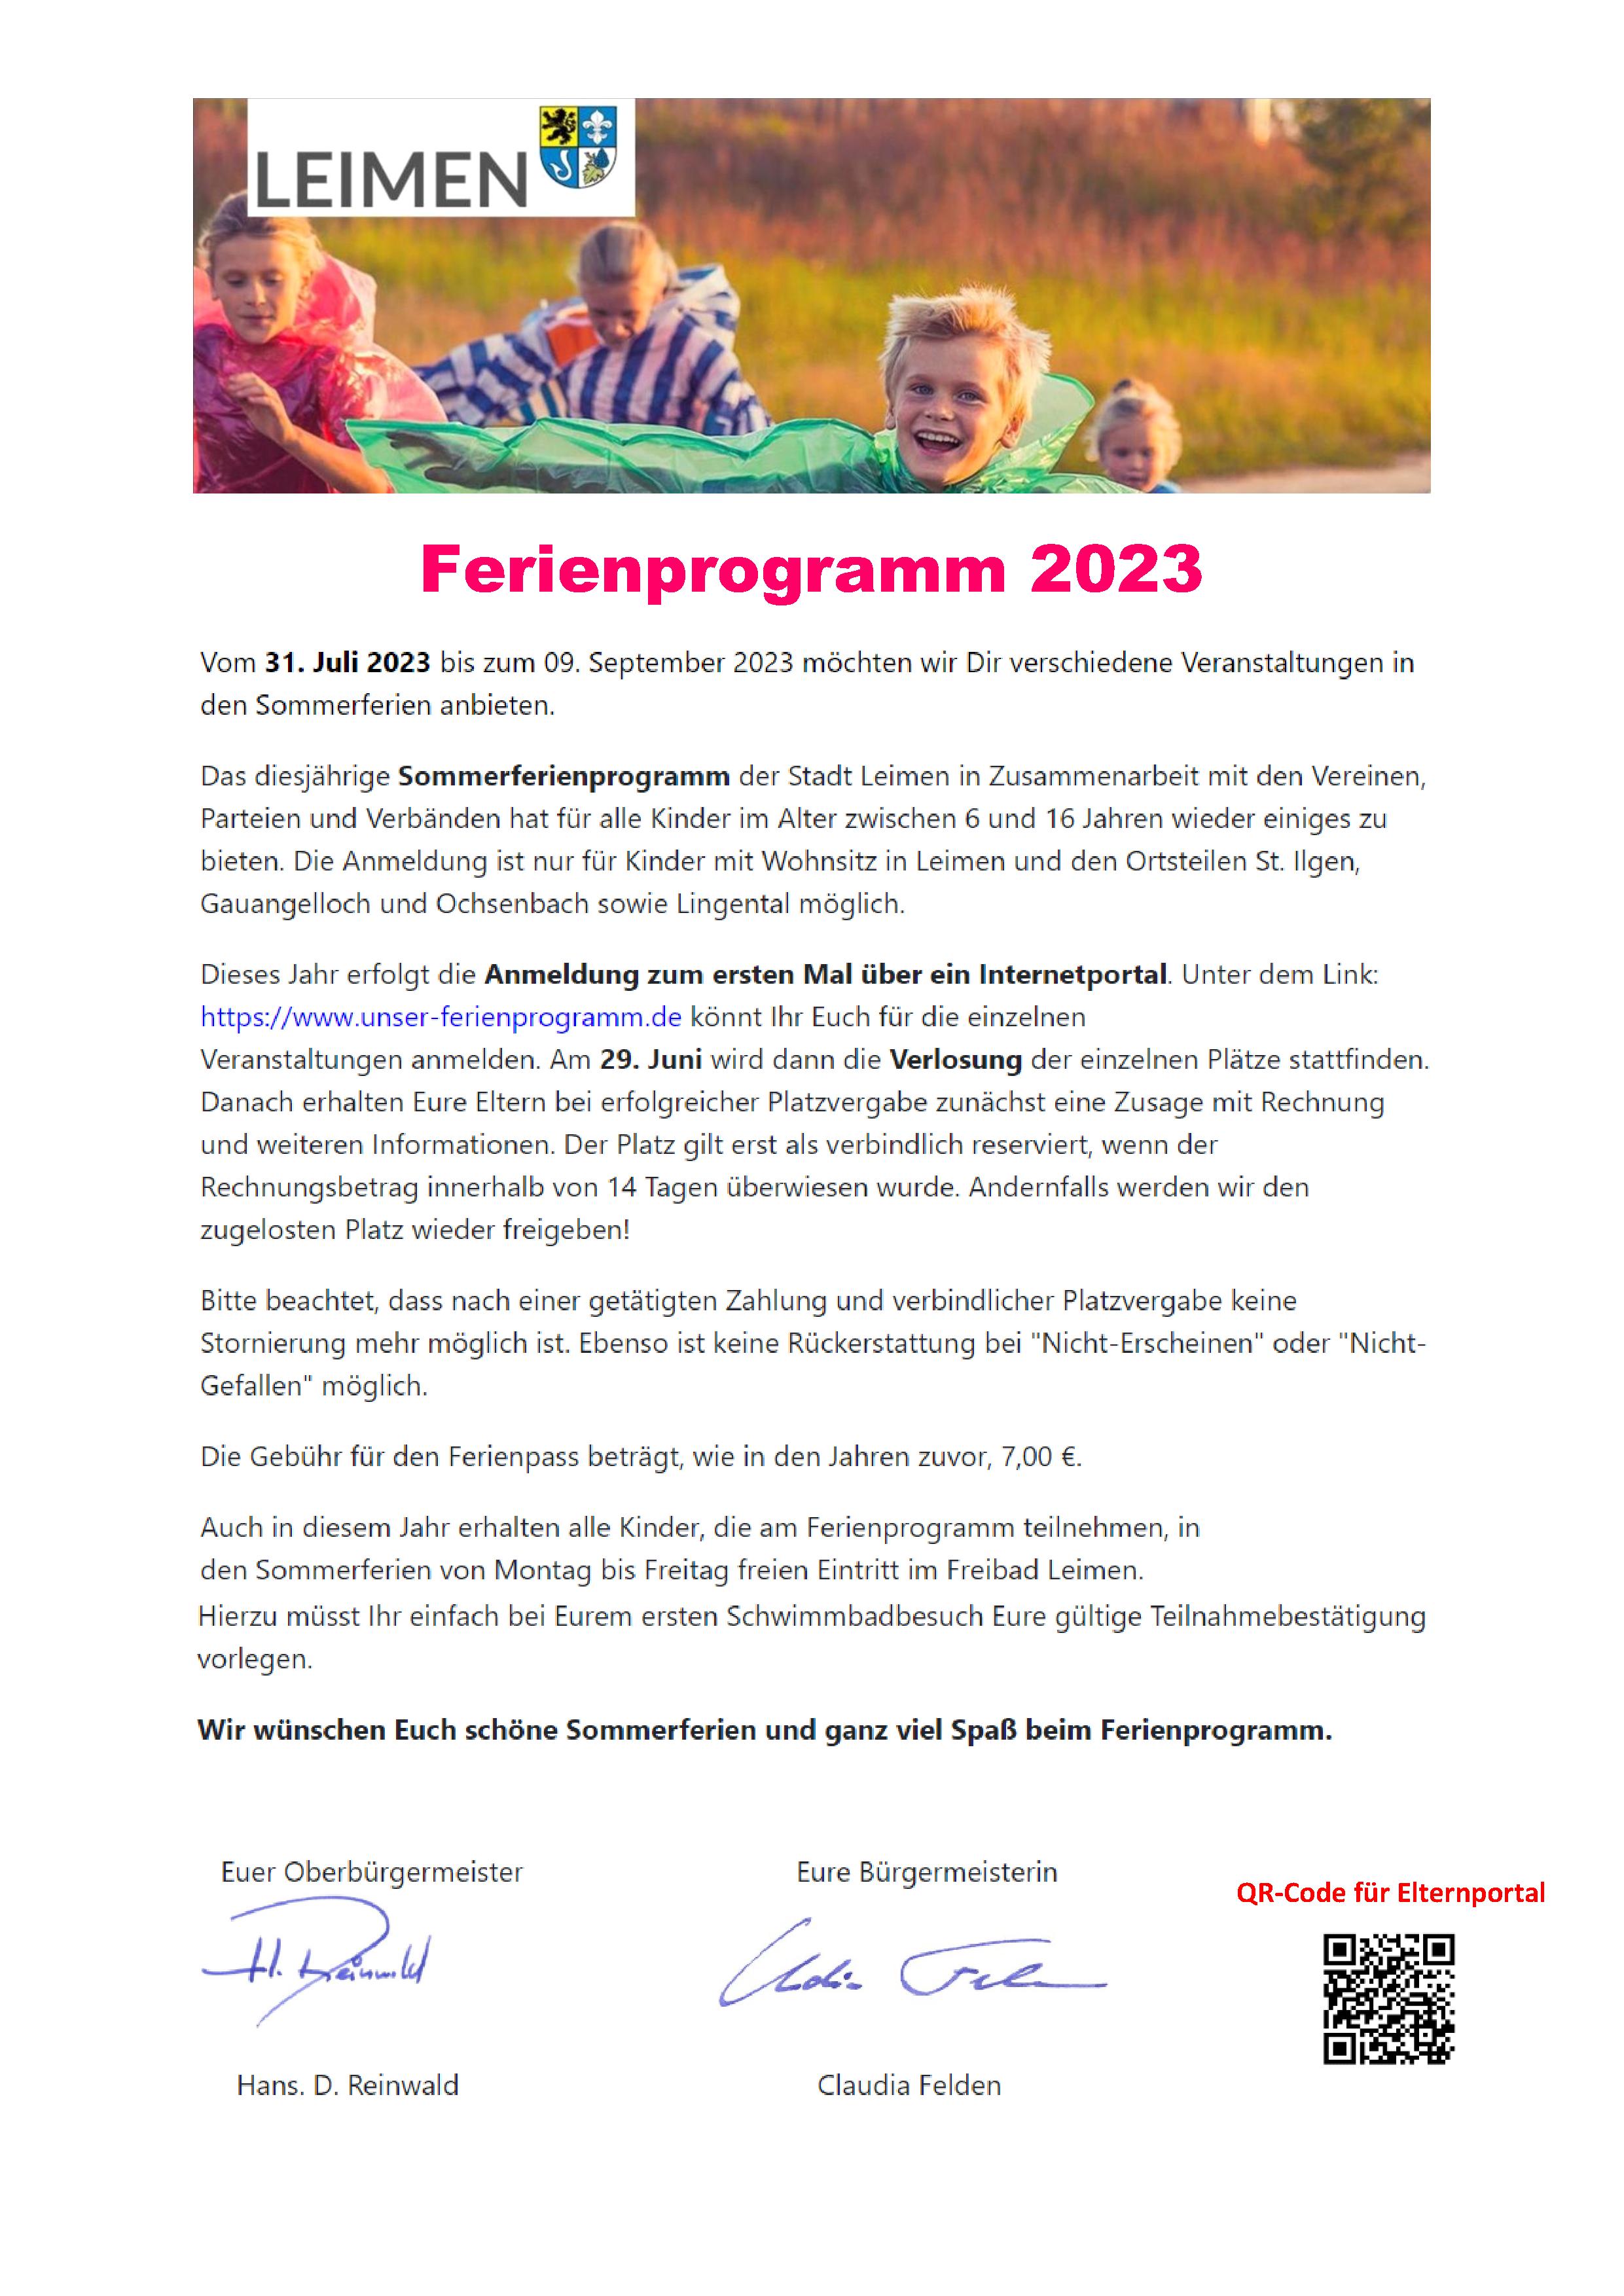  Stadt Leimen - Ferienprogramm 2023 